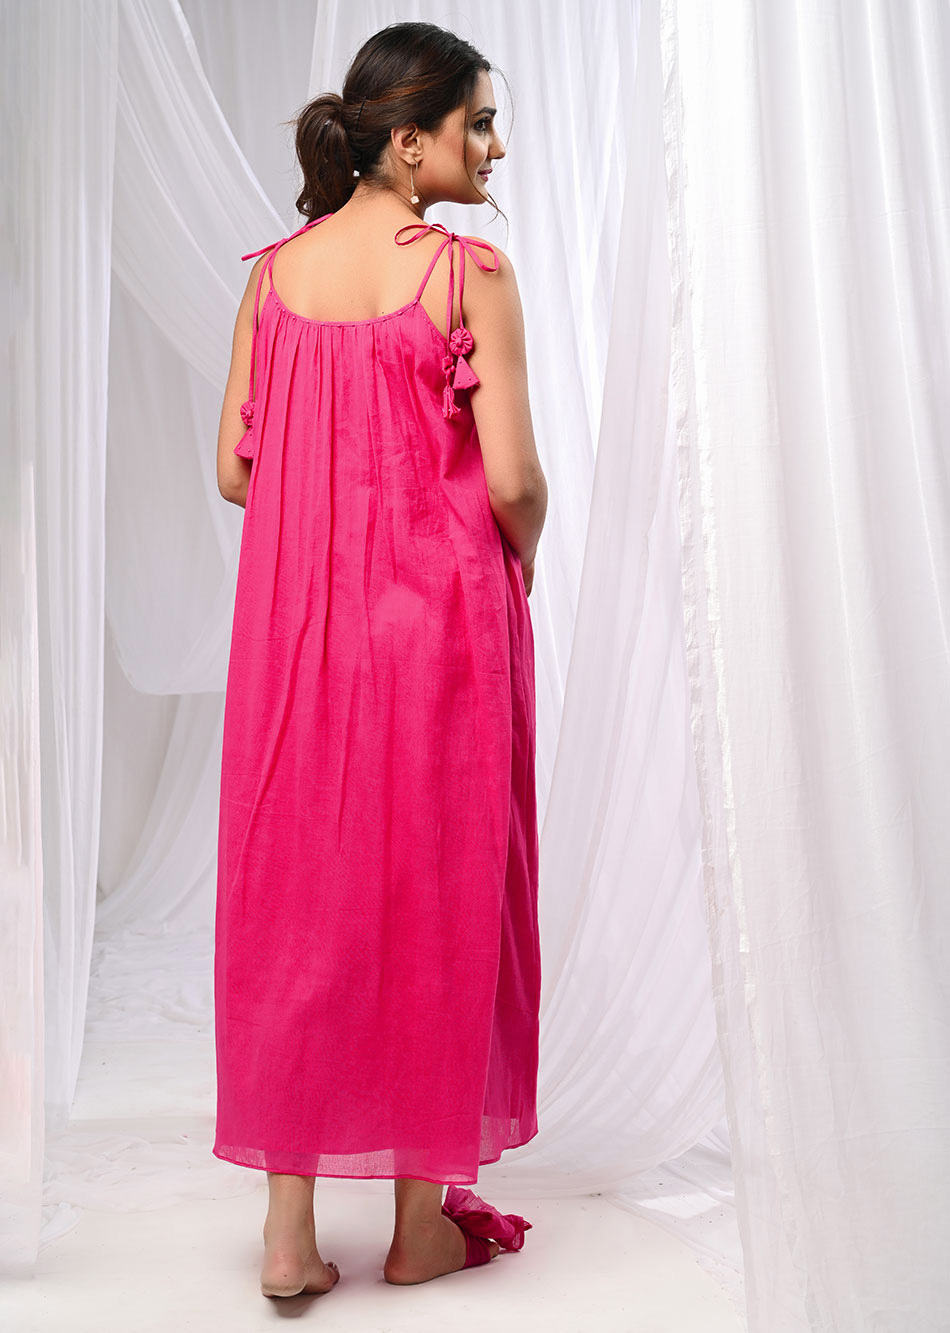 Summer Halter Dress (Rani) By Jovi Fashion